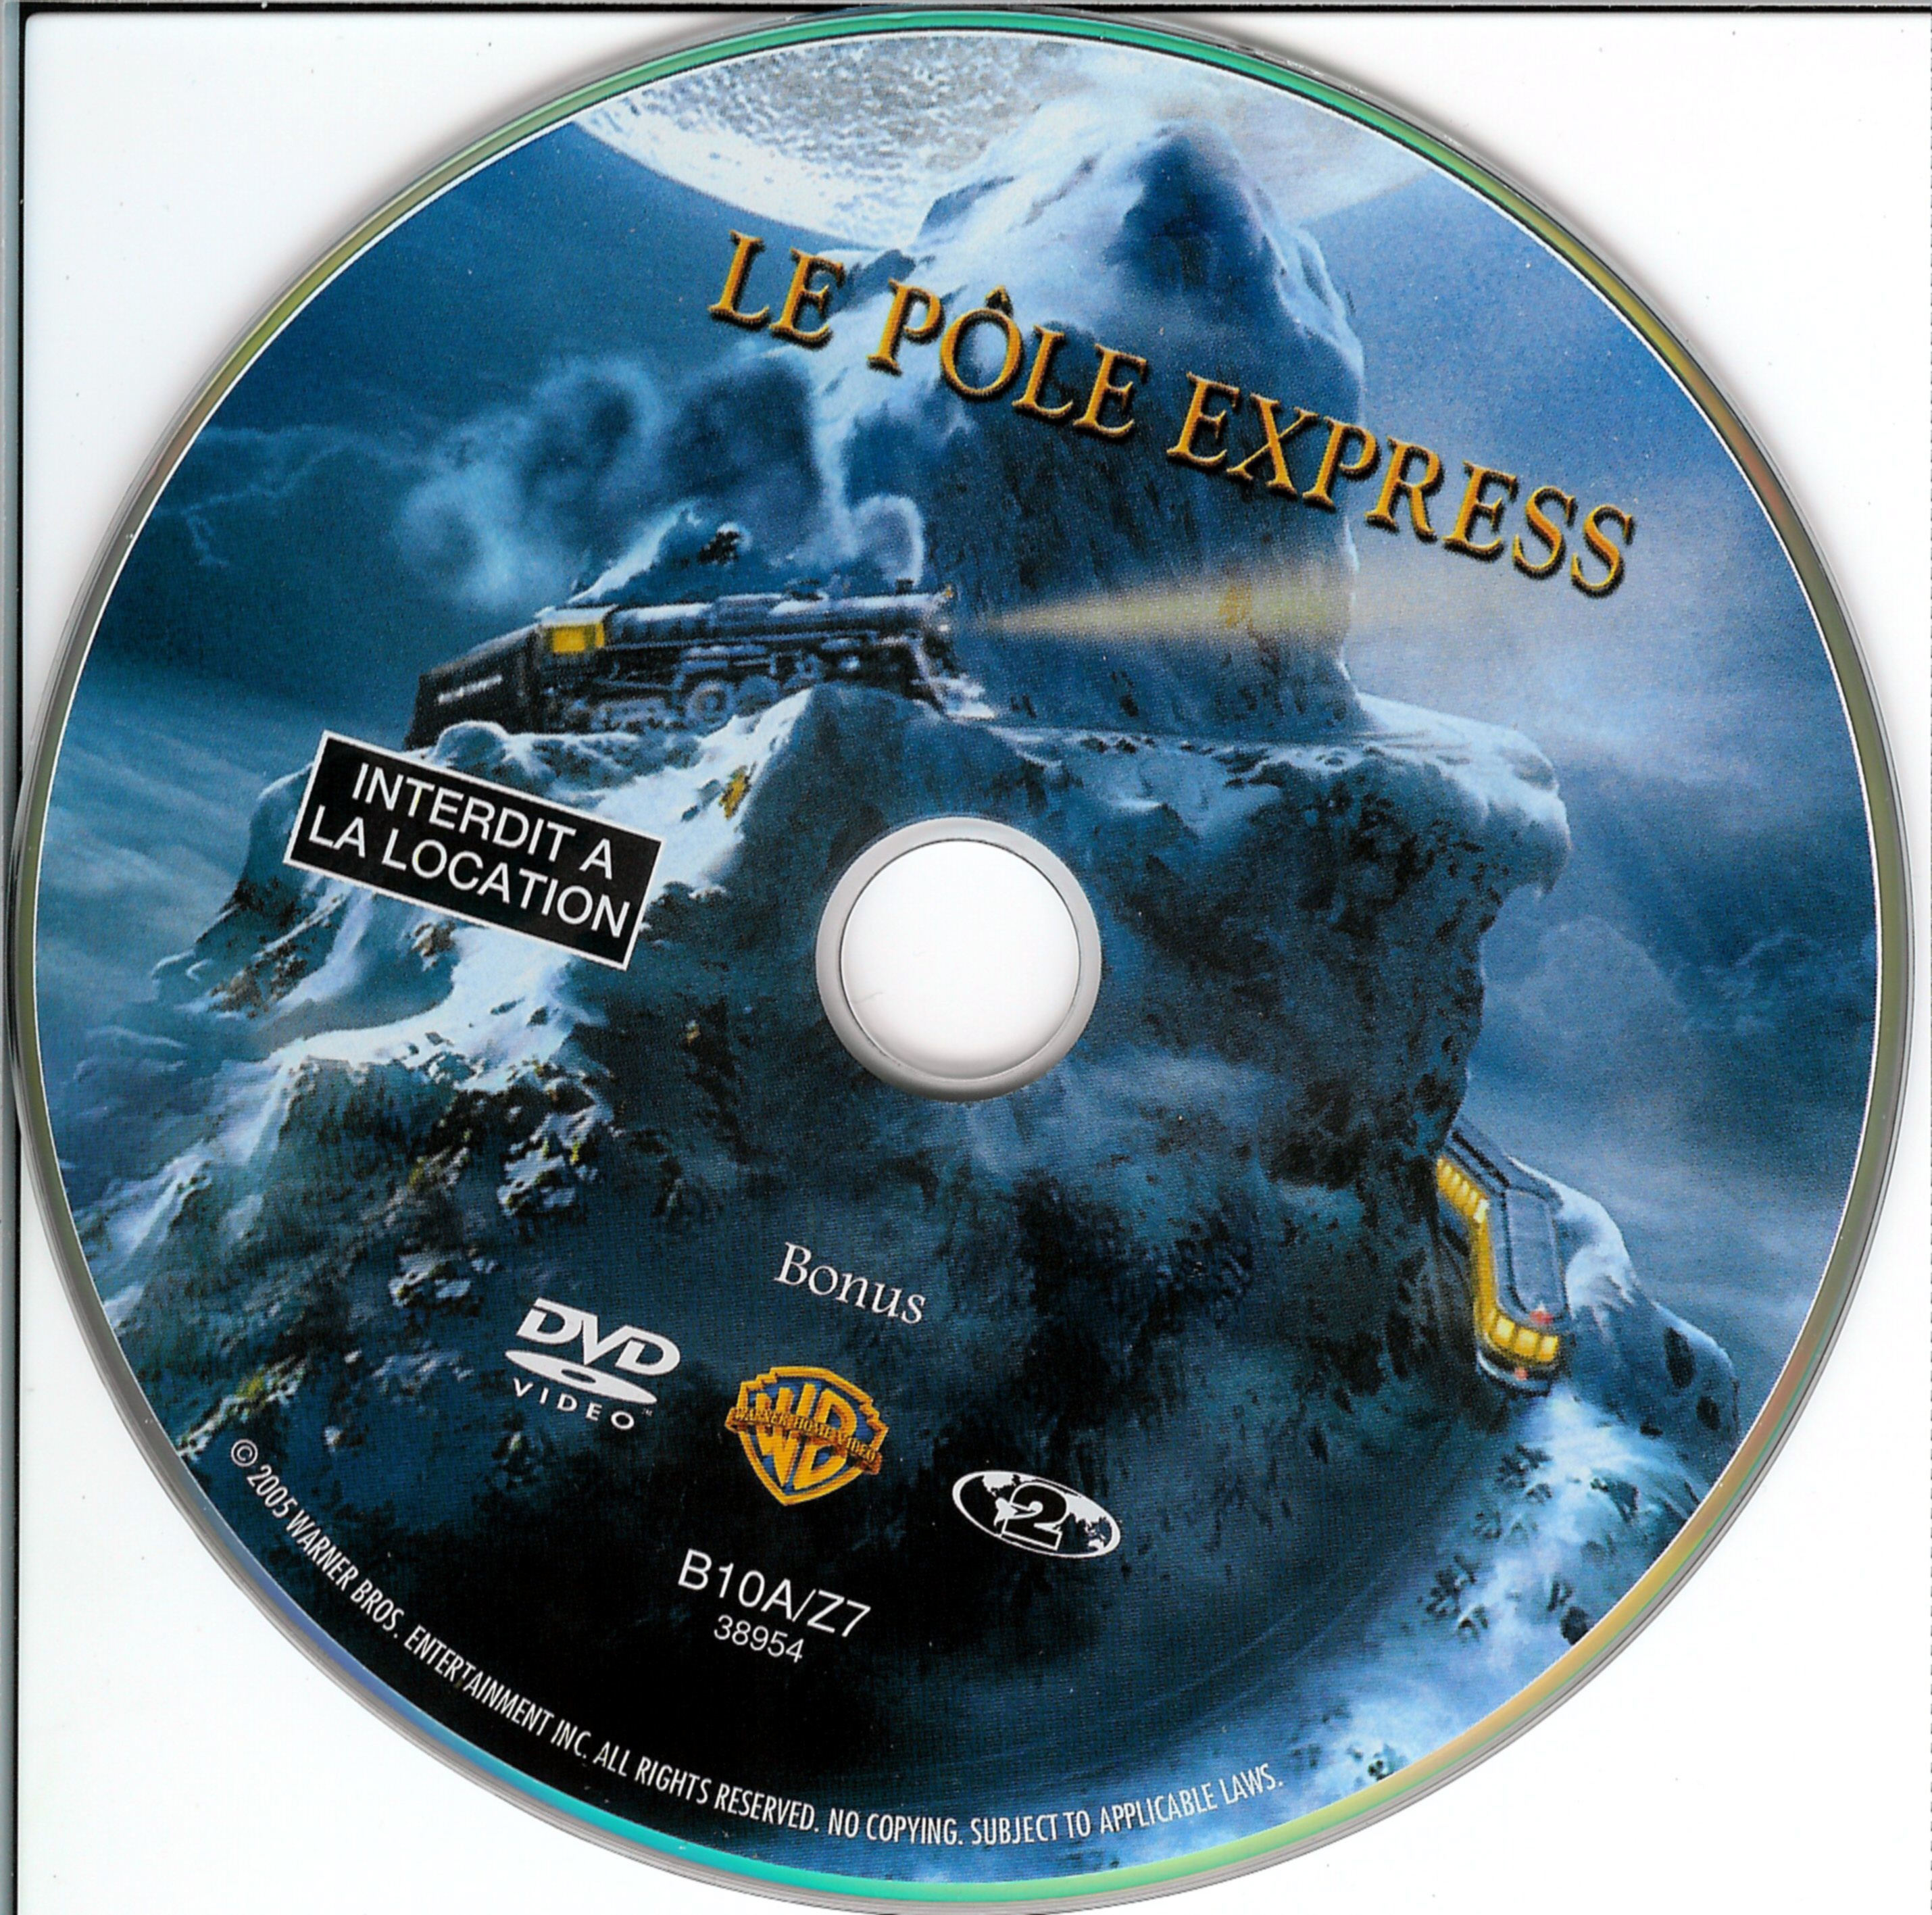 Le pole express DISC 2